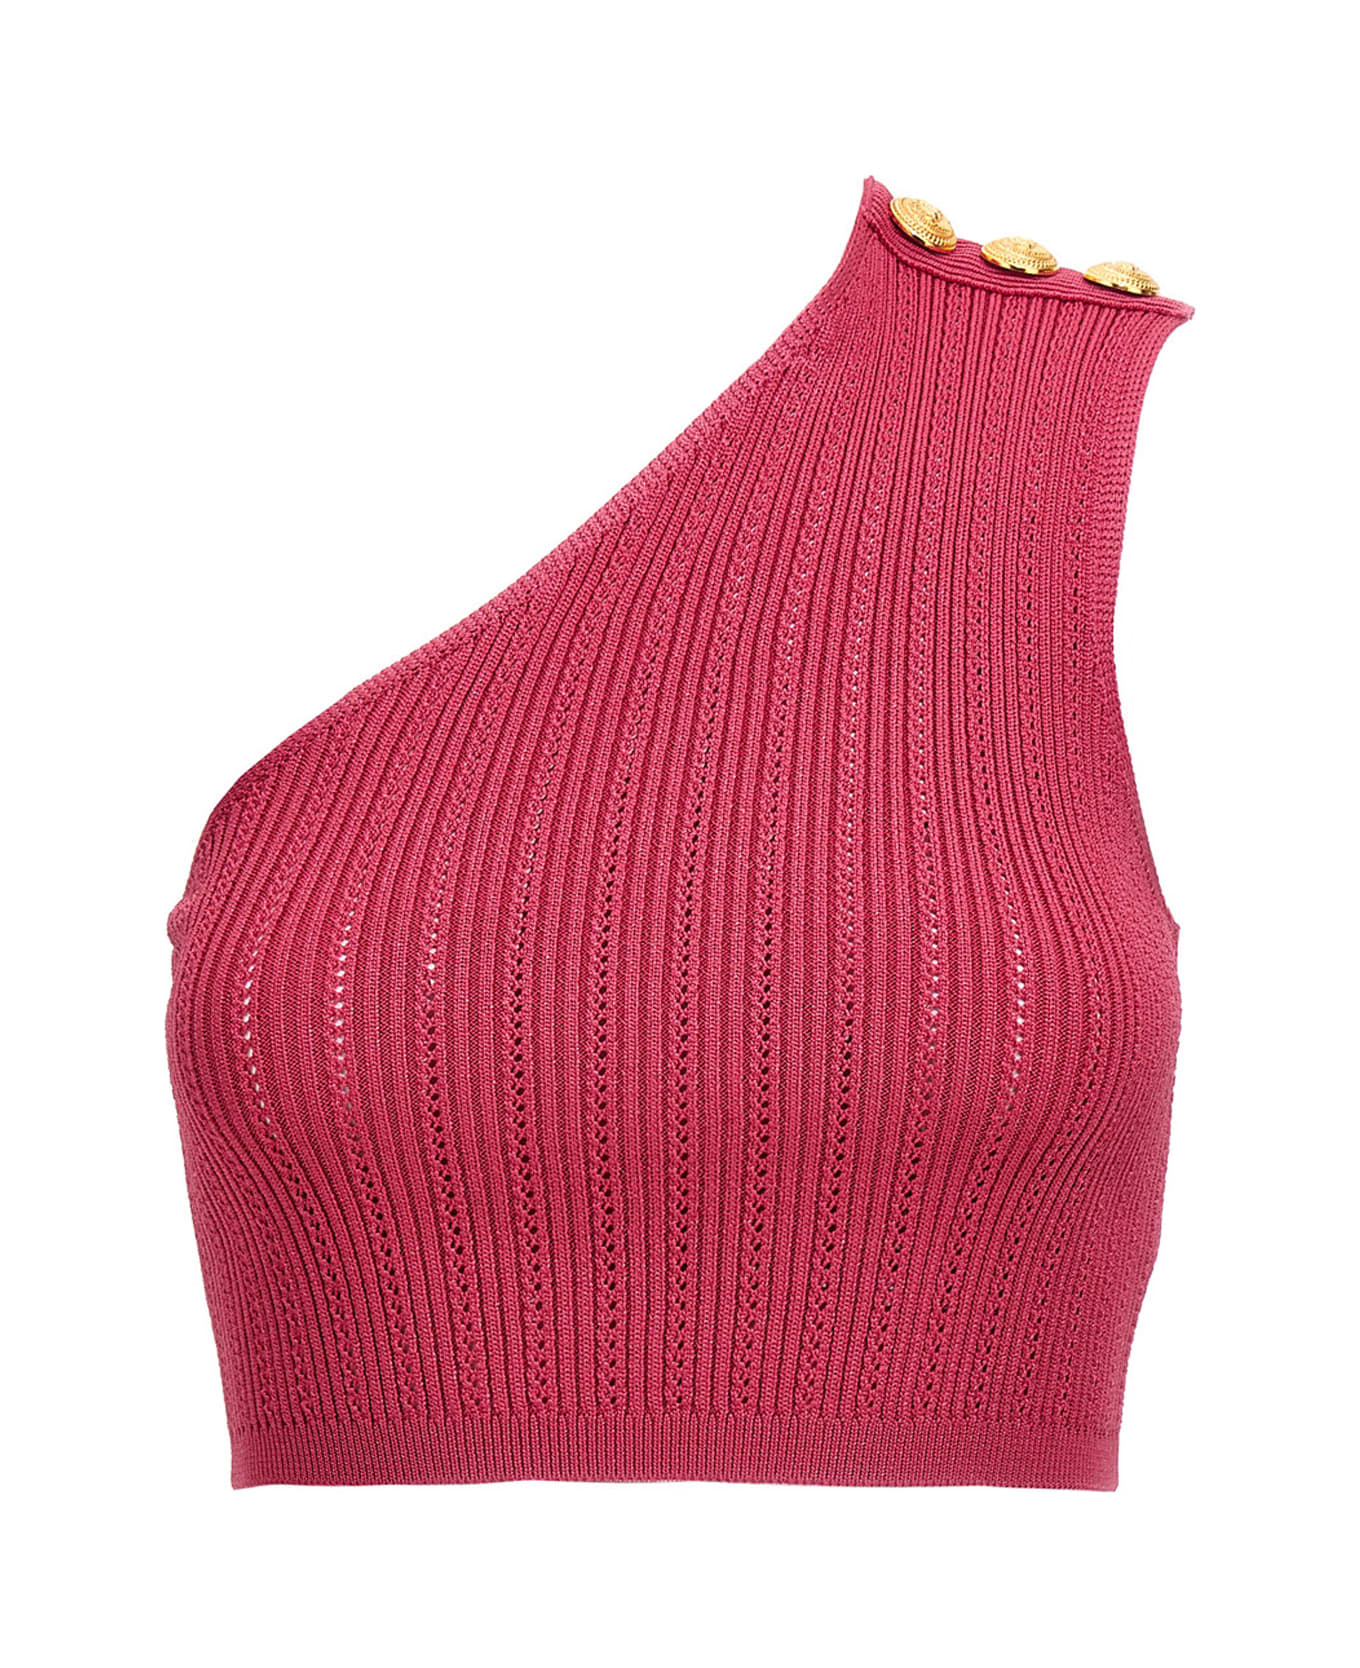 Balmain One Shoulder Ribbed Knit Top - Fuchsia